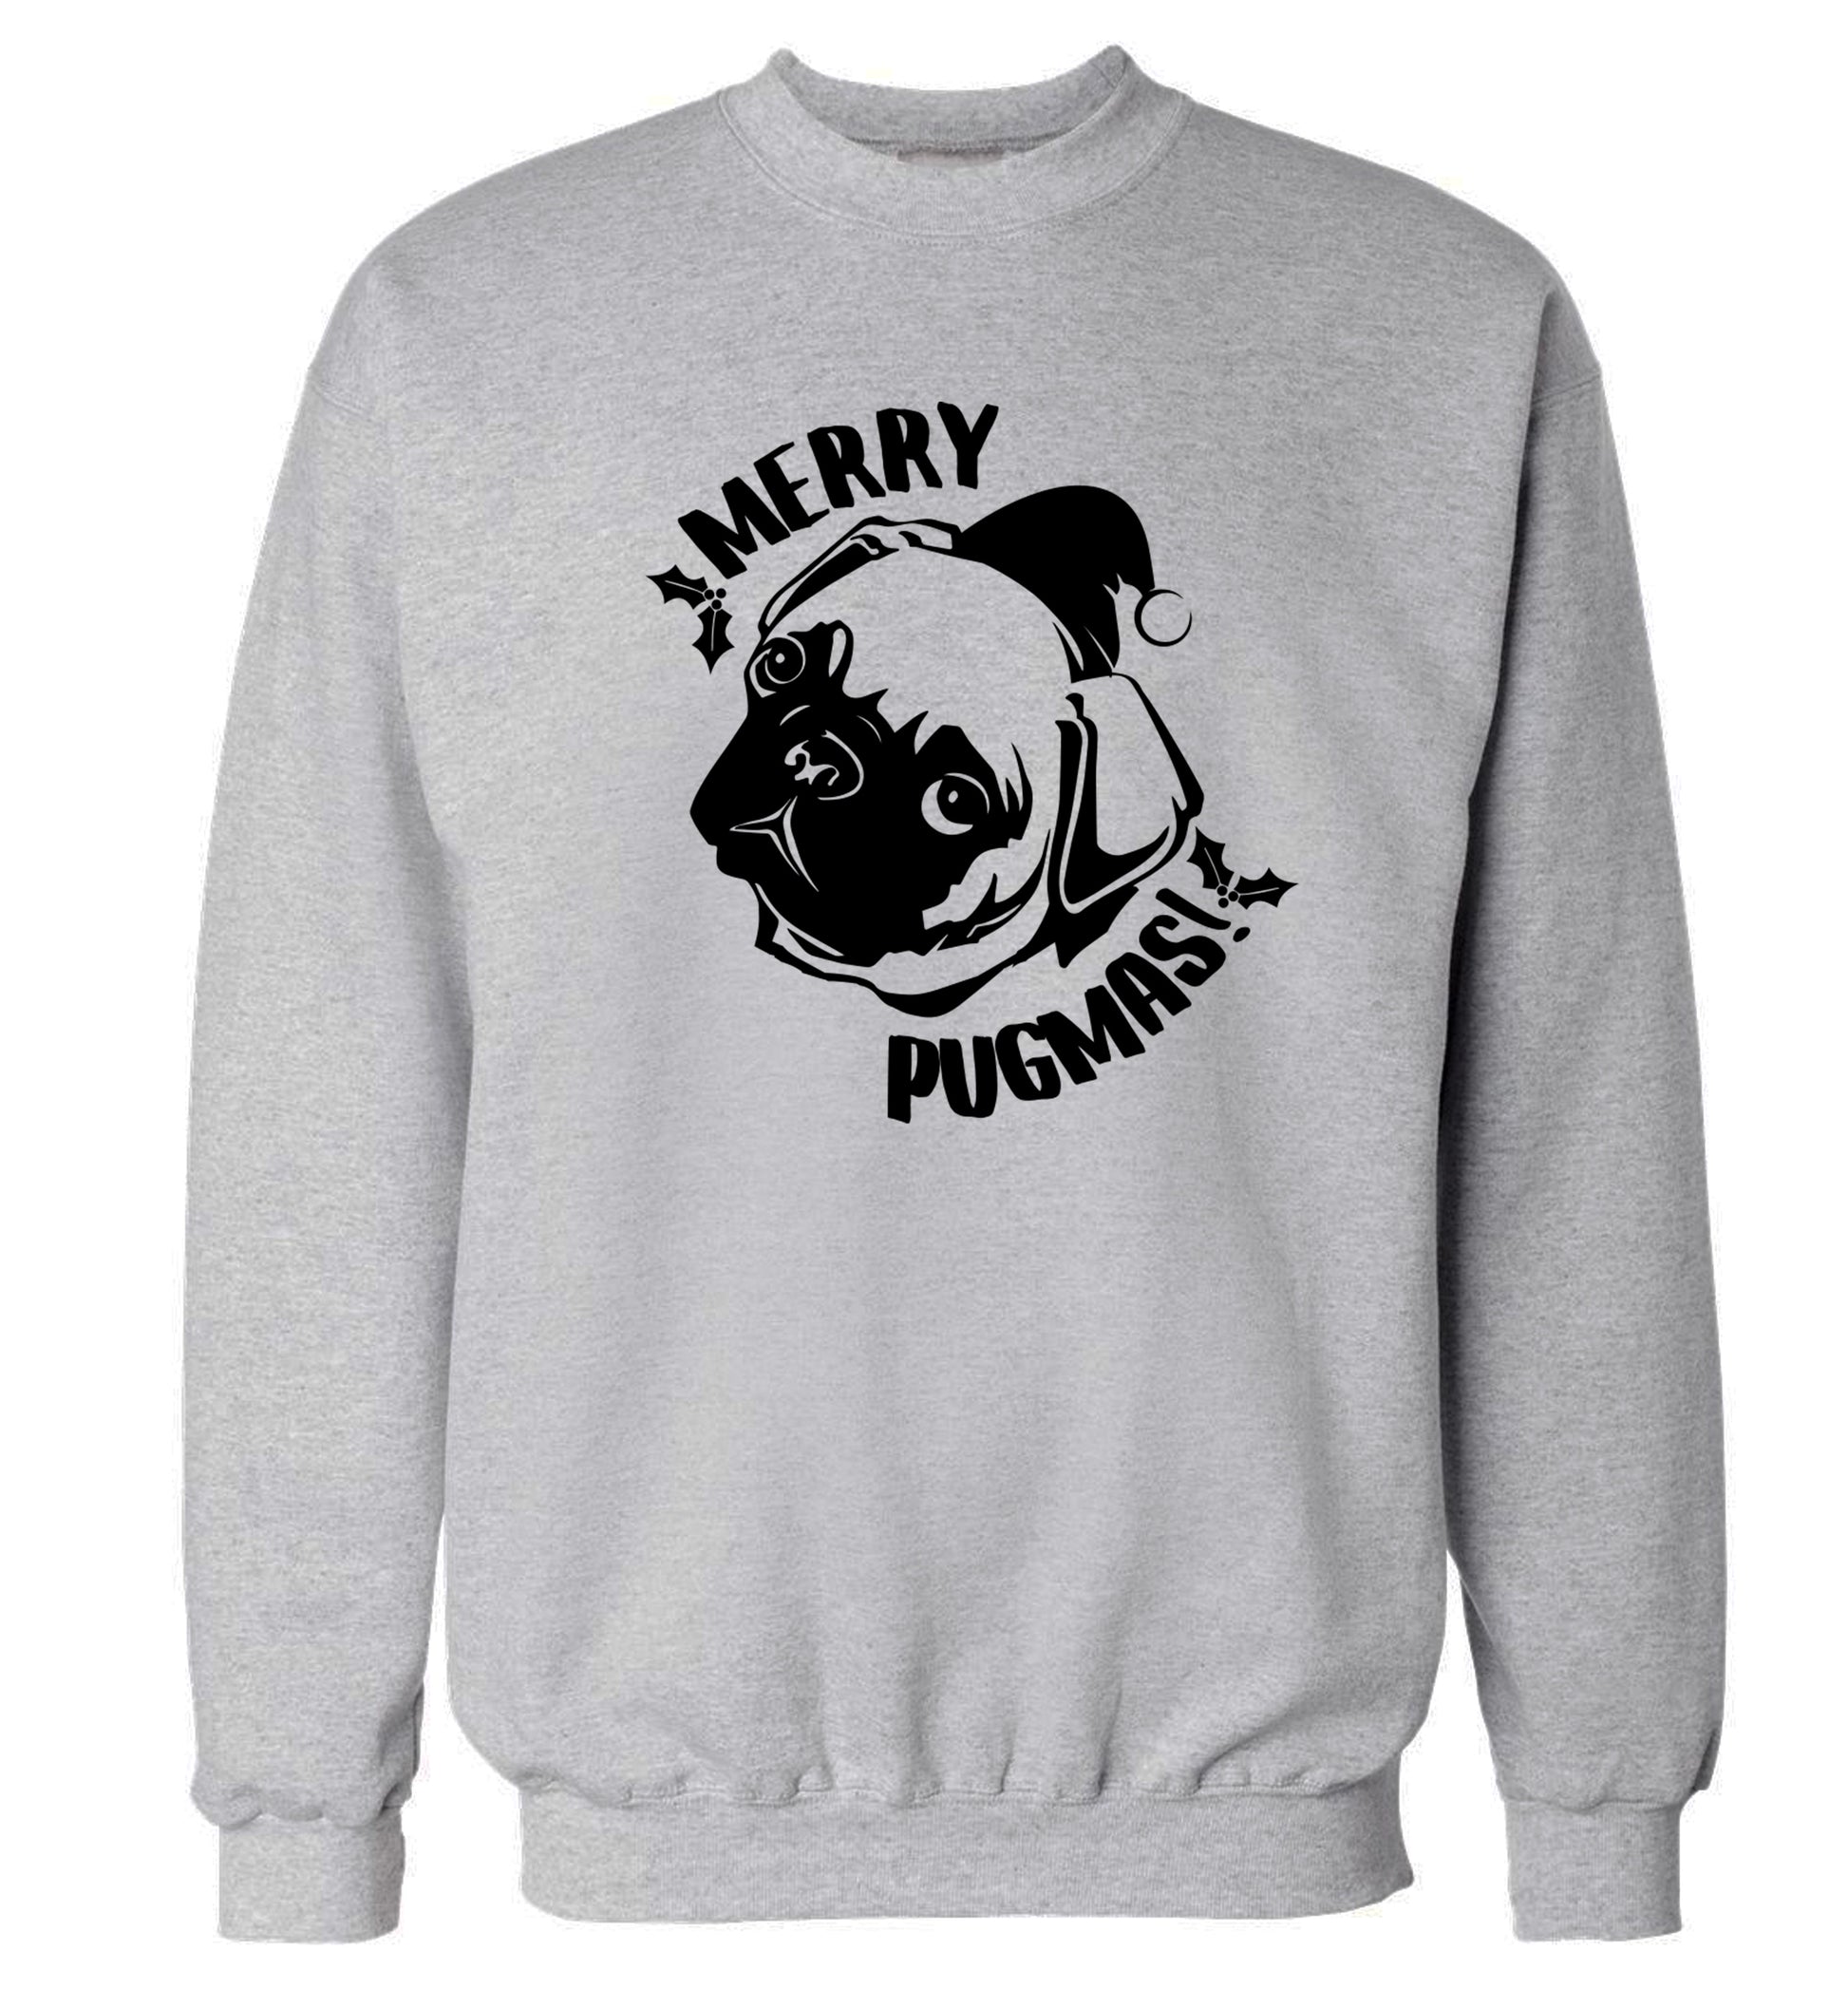 Merry Pugmas Adult's unisex grey Sweater 2XL